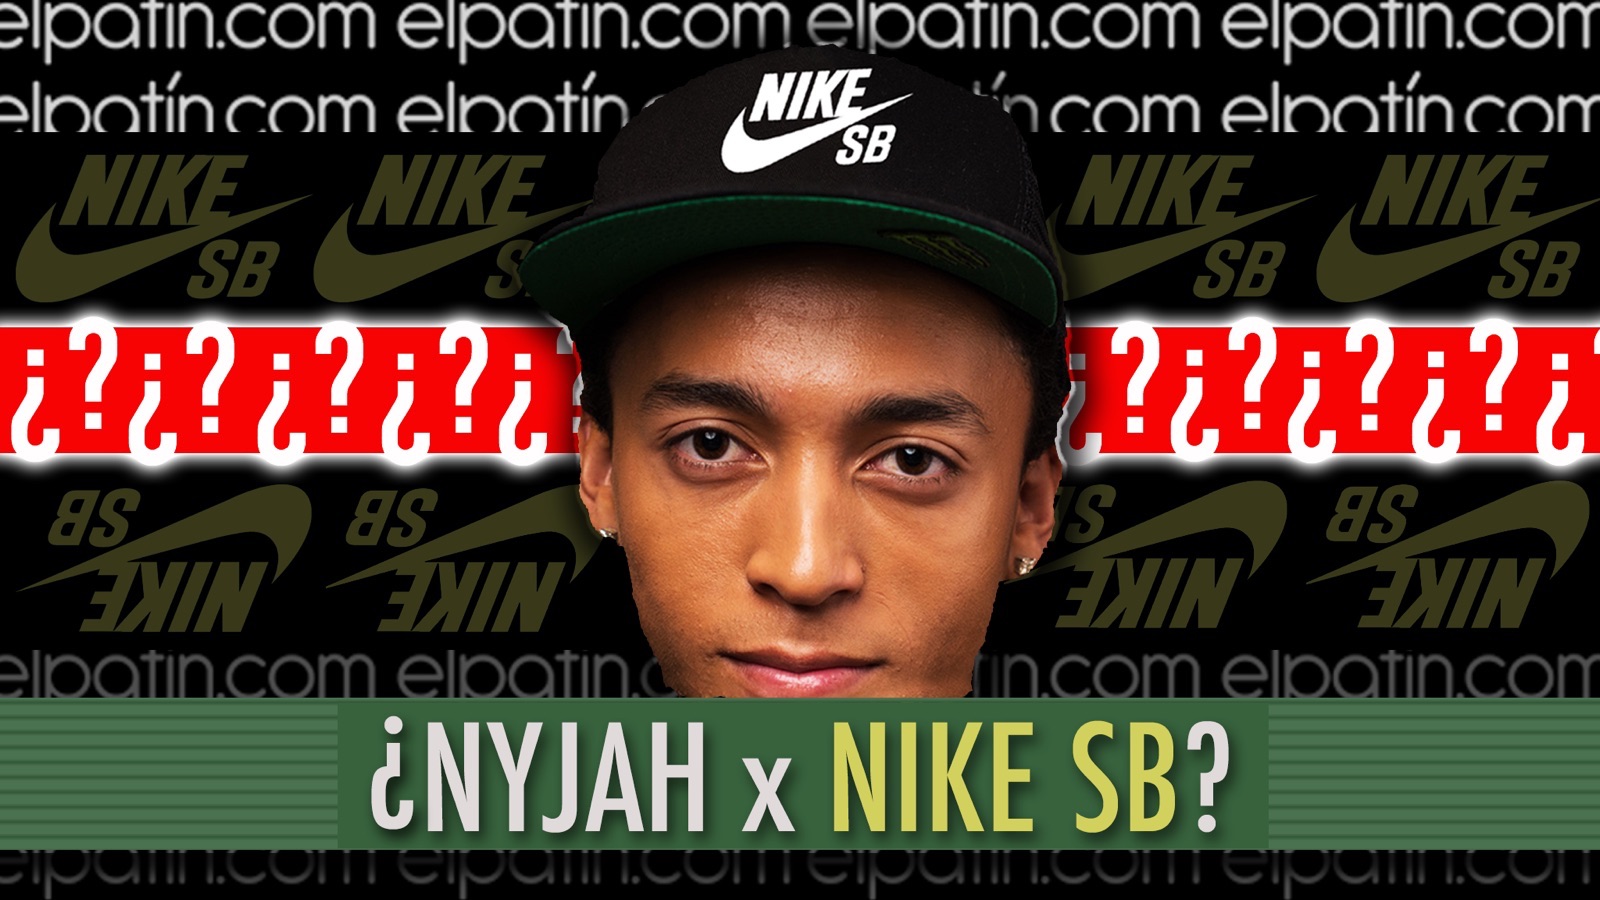 Ofensa Autor aleación Nyjah Huston x Nike SB? | elpatin.com